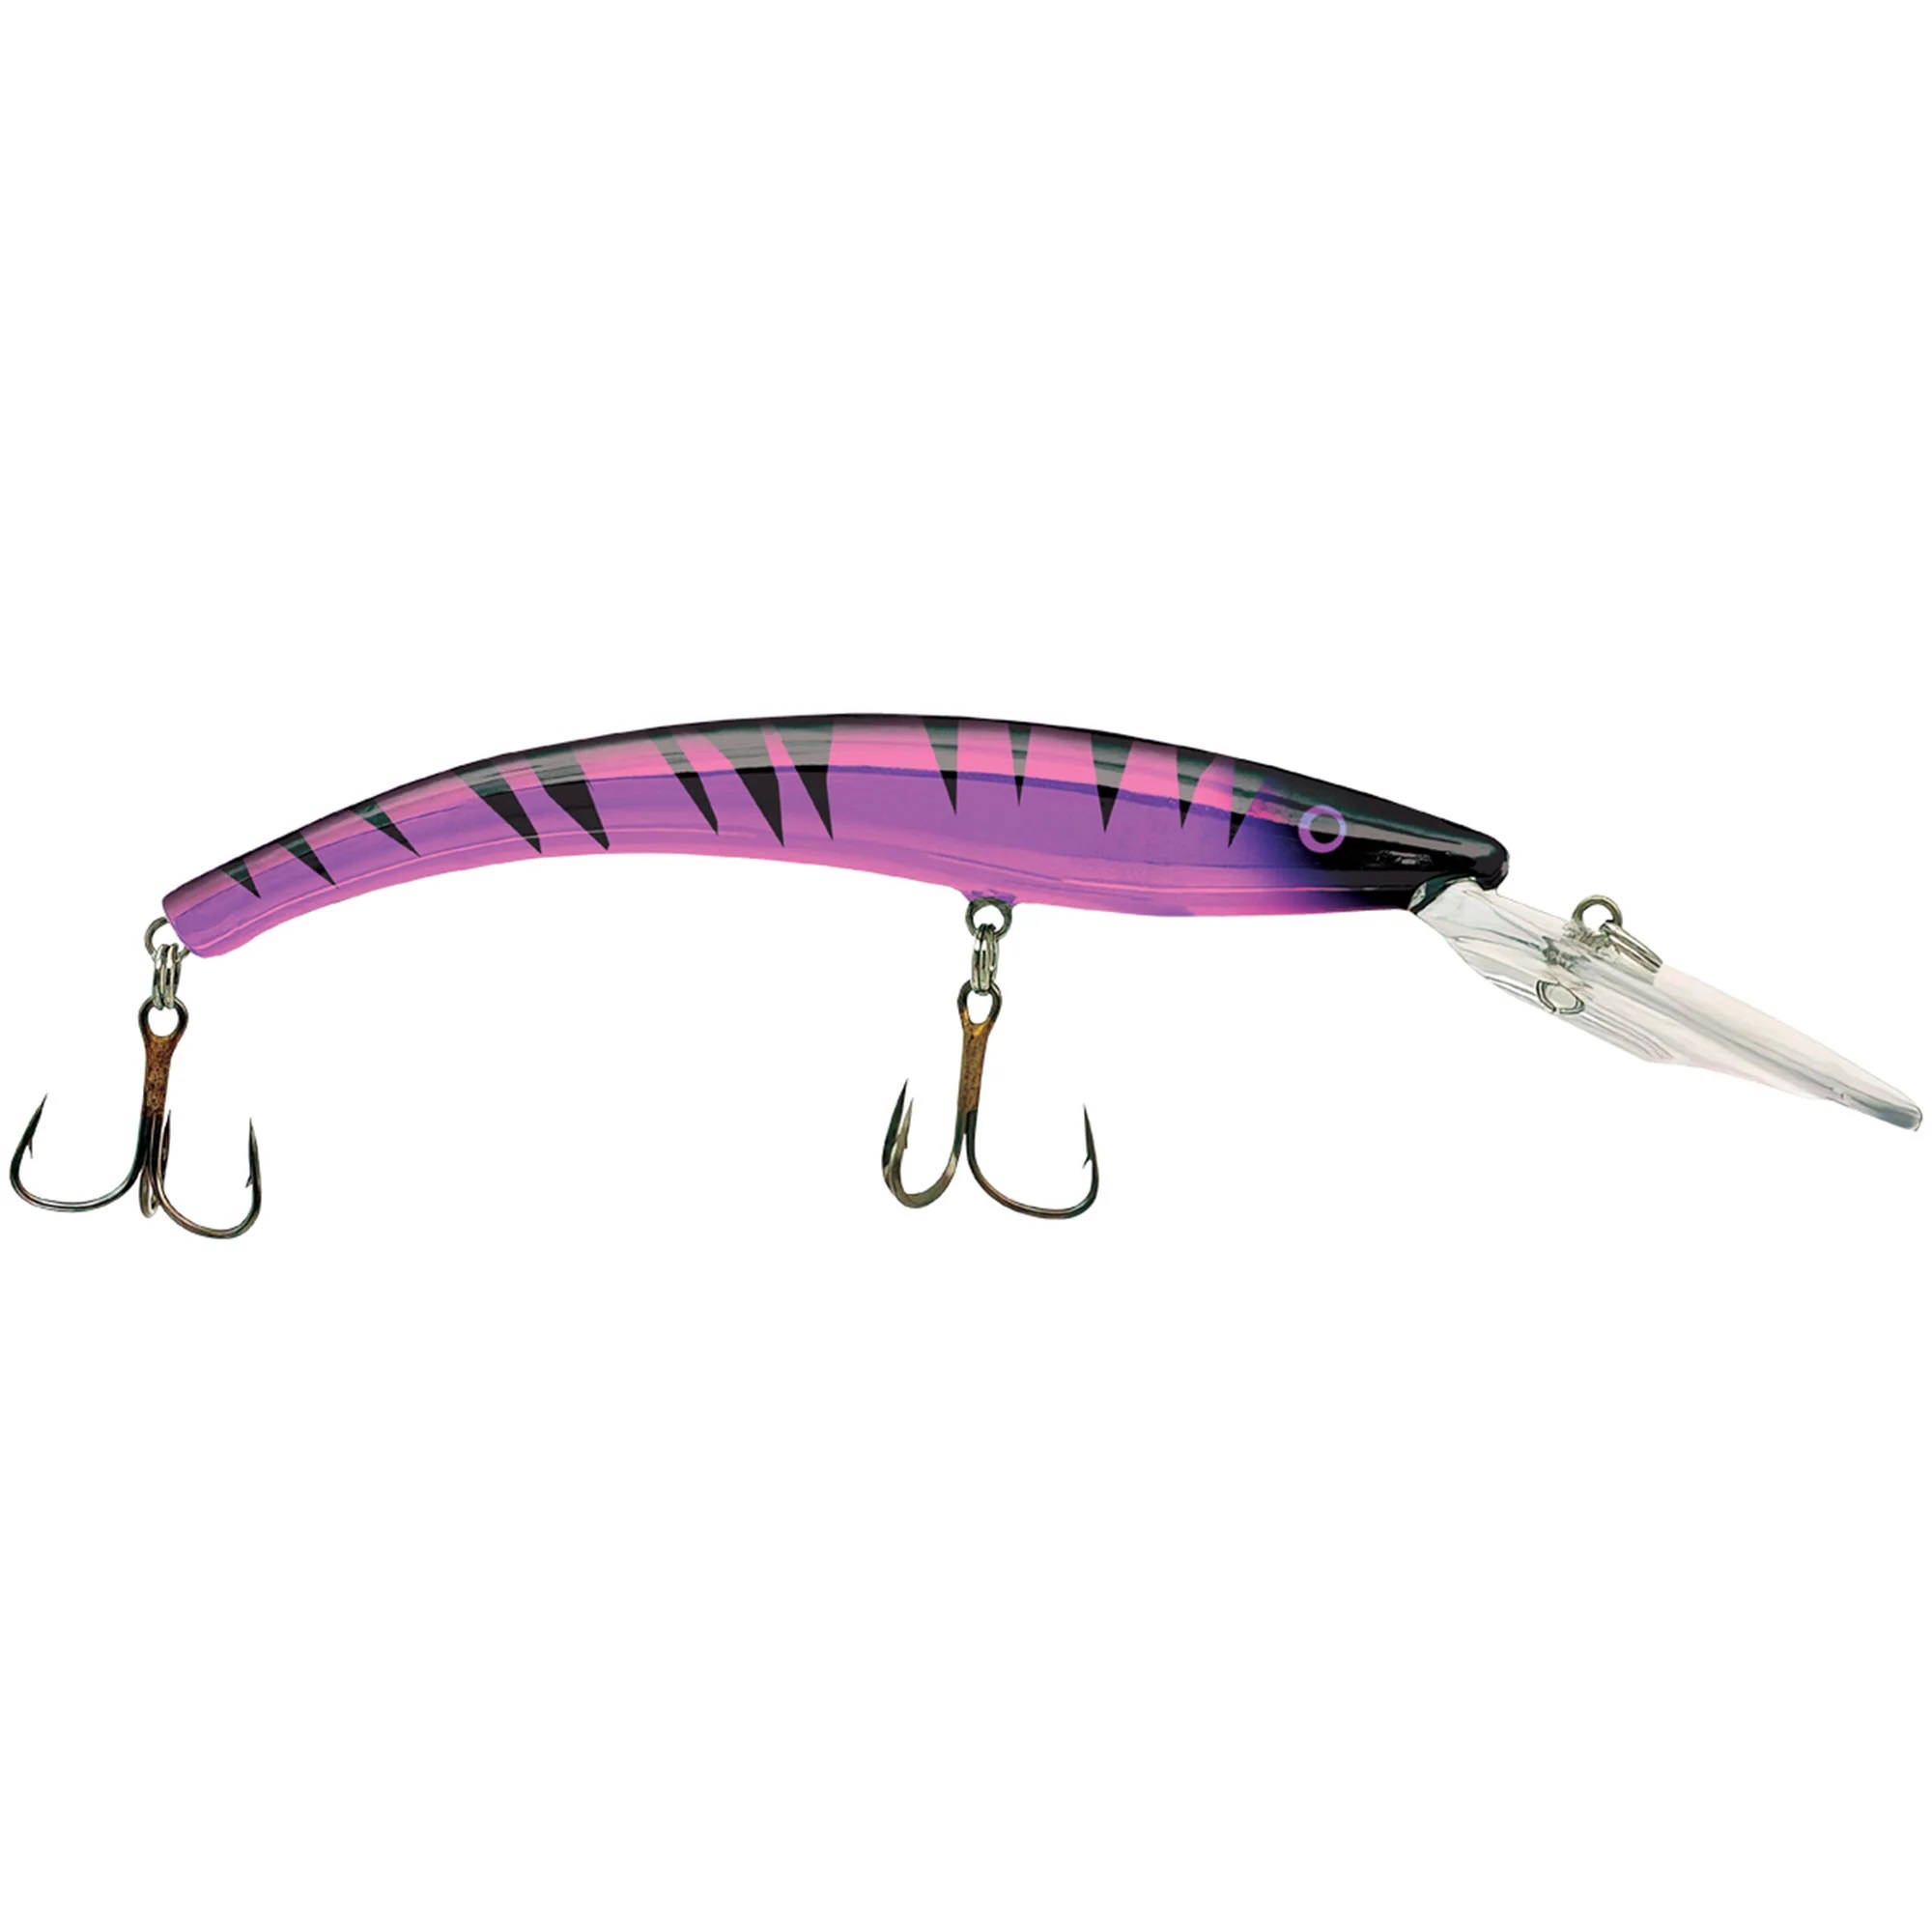 https://fishingurus.com/media/catalog/product/r/e/reef-runner-800-purple-tiger.jpg